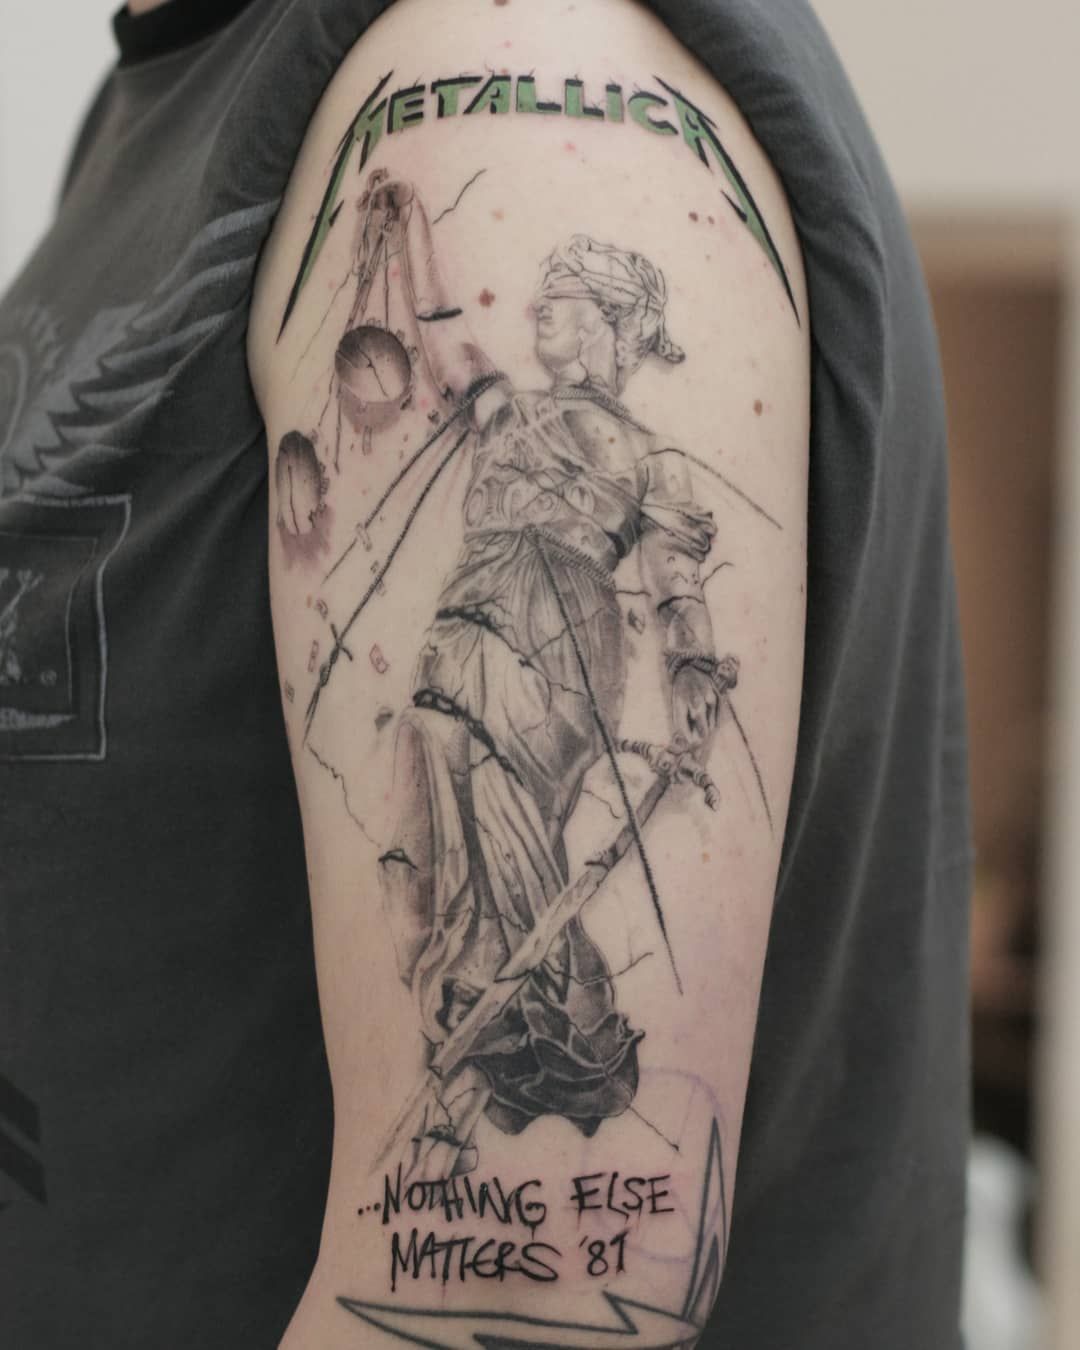 Metallica's fan tattoos - Tattoo Designs for Women - Music